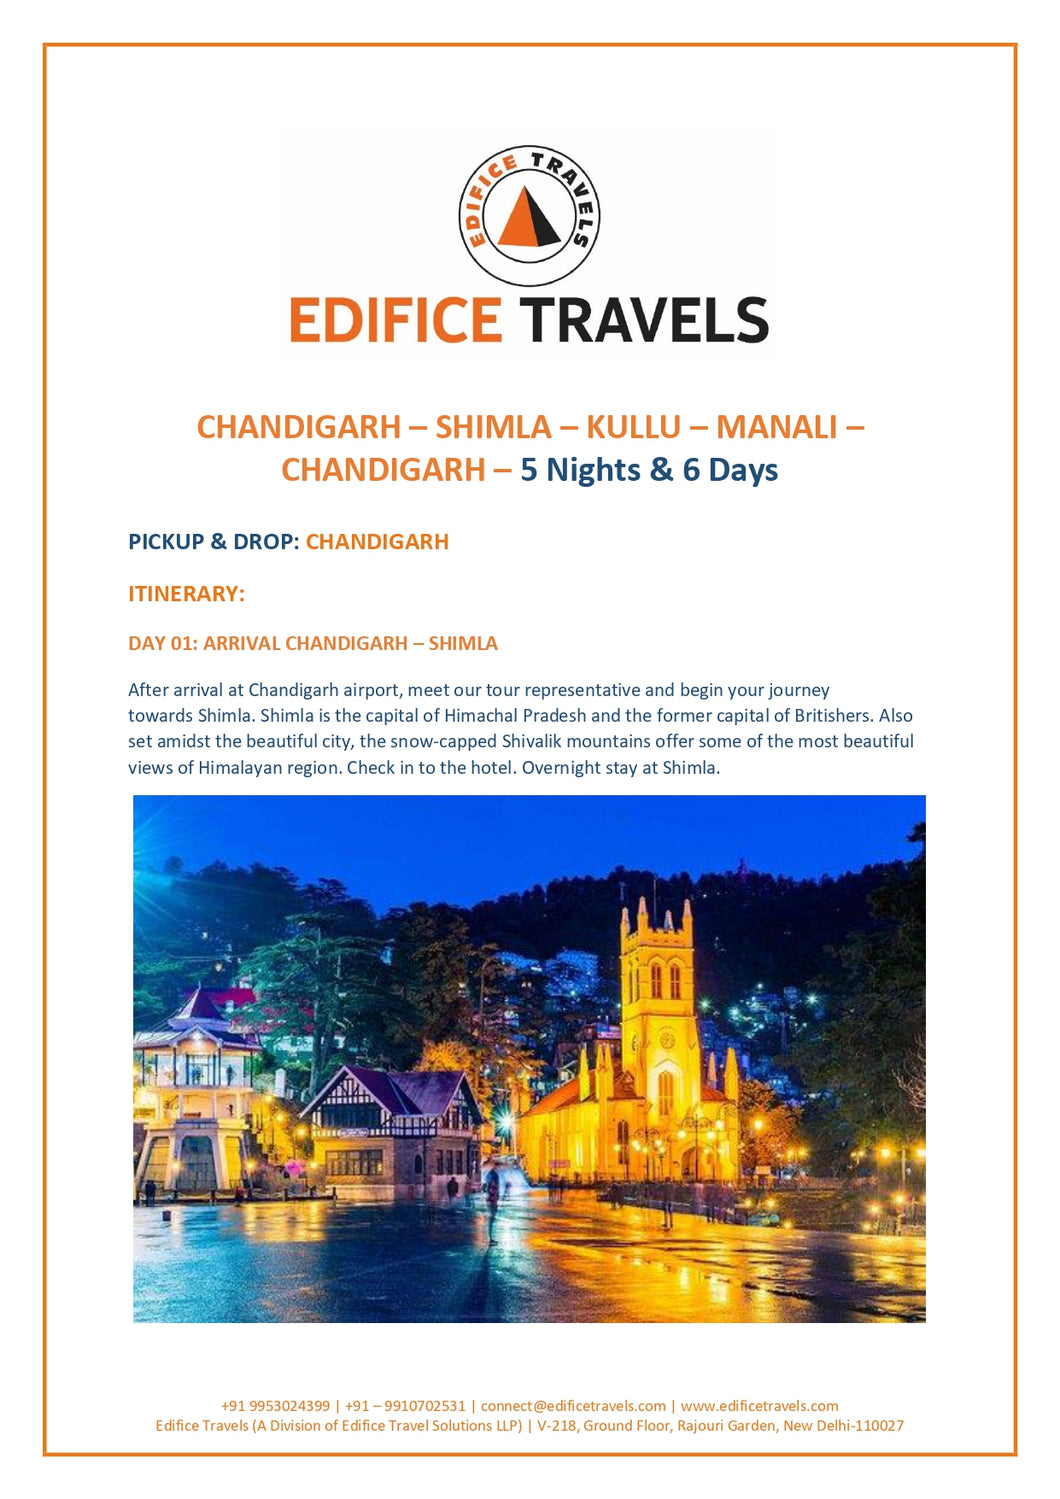 Chandigarh - Shimla - Kullu - Manali - 5 Nights & 6 Days - 4 Star Hotel Category